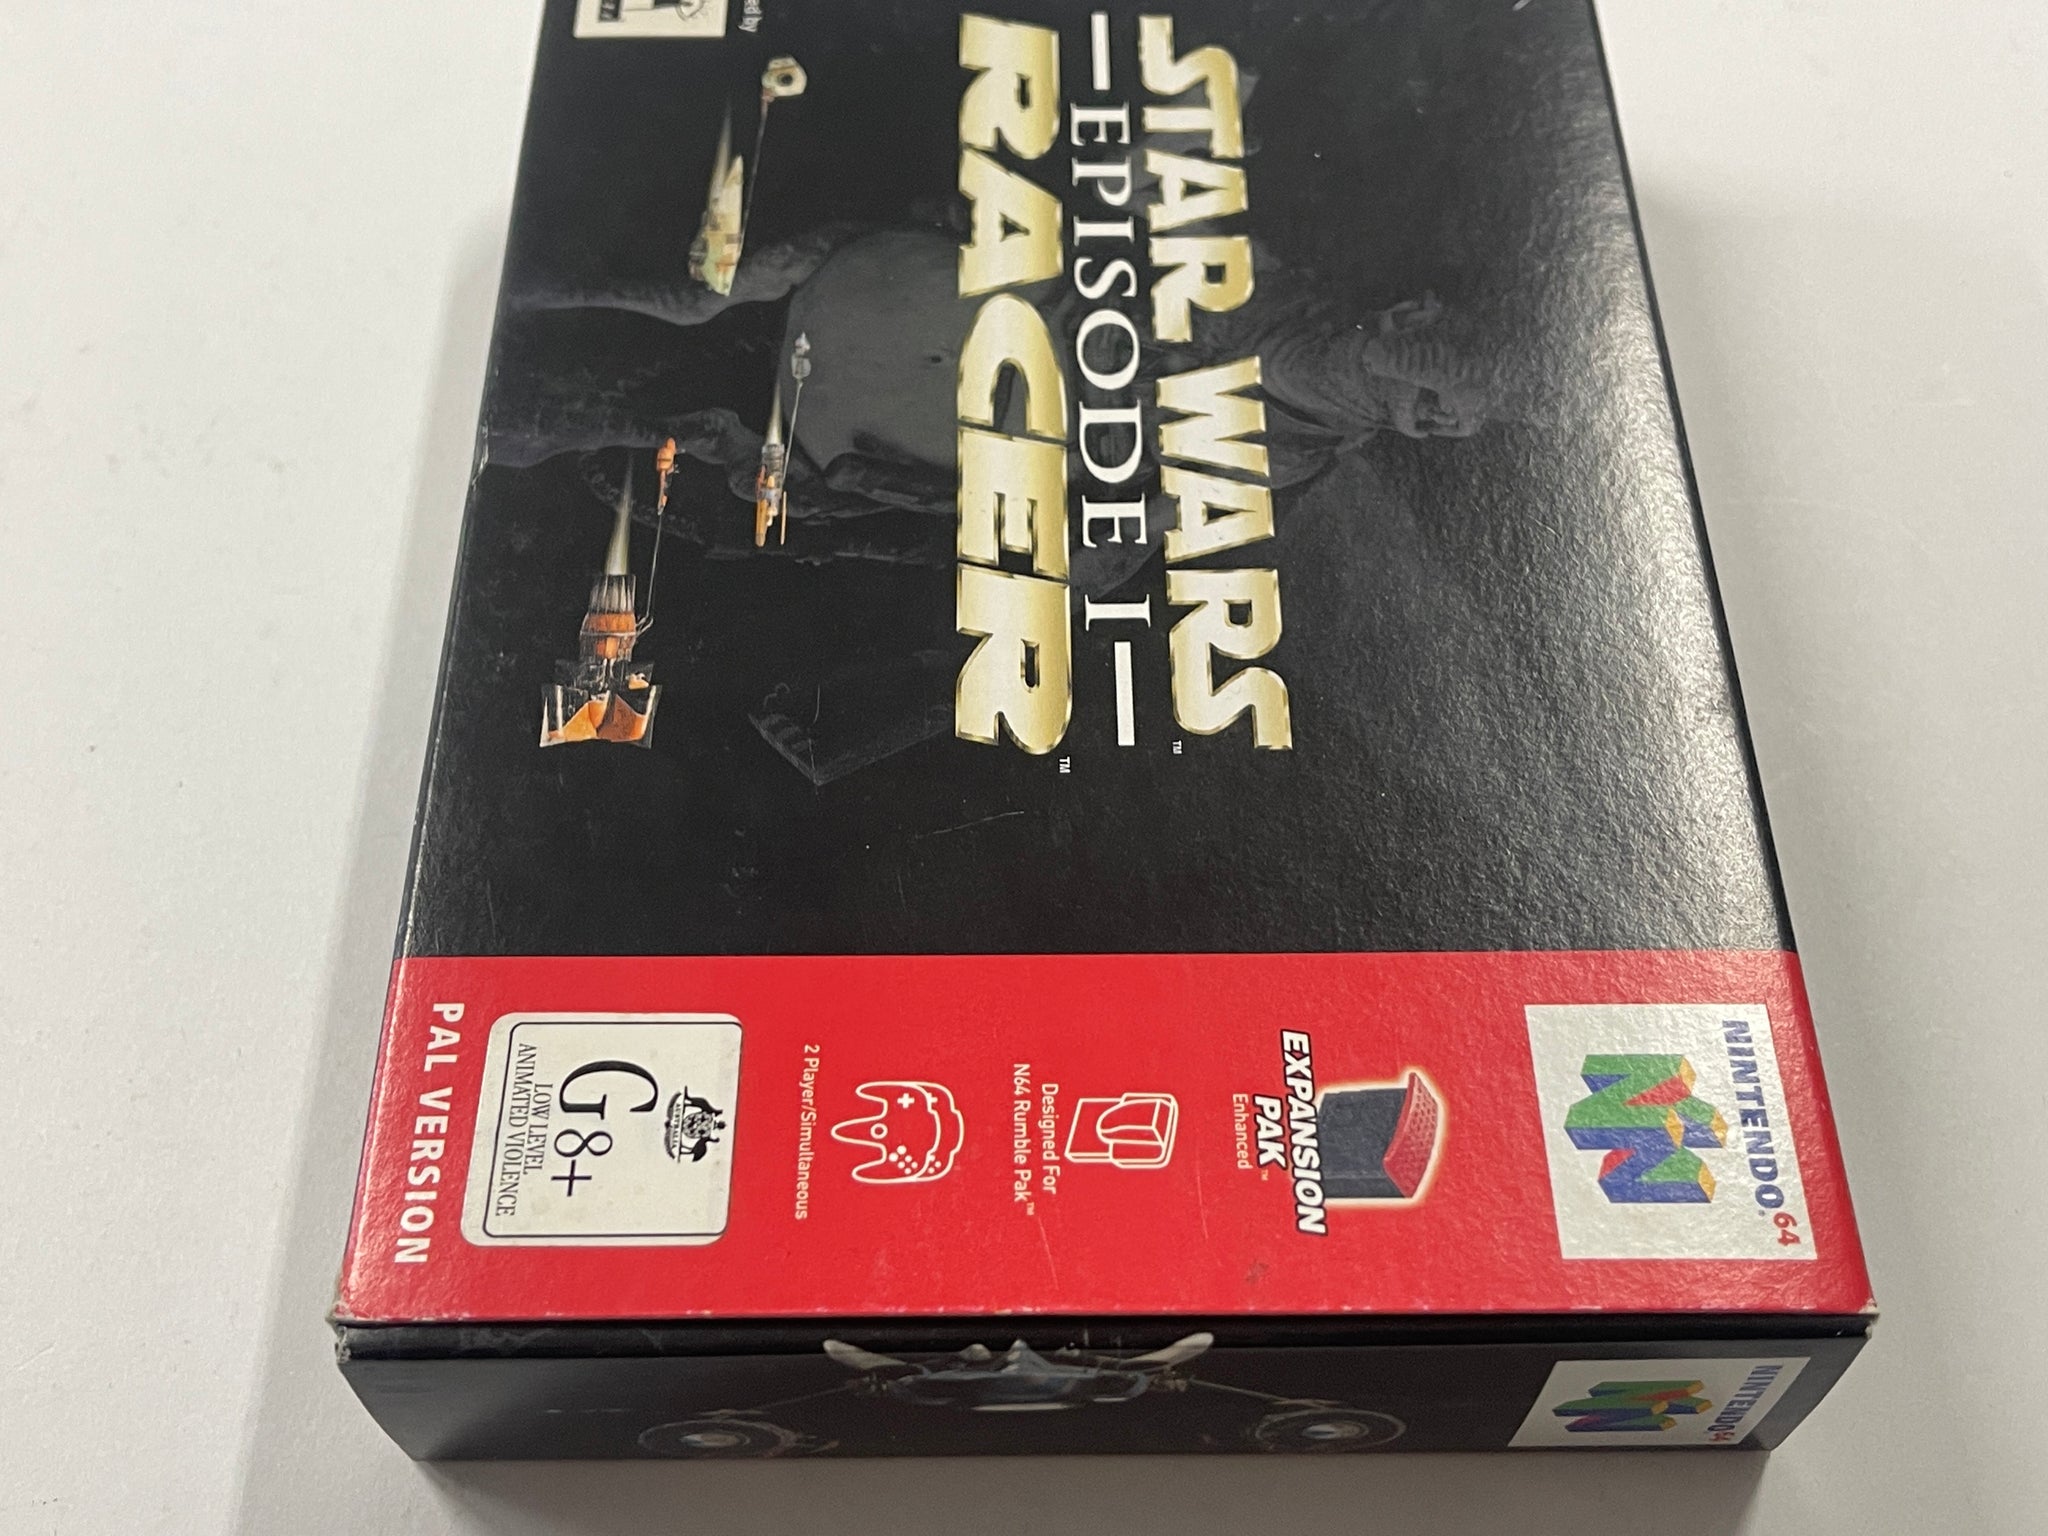 Star Wars Episode 1 Racer Complete In Box